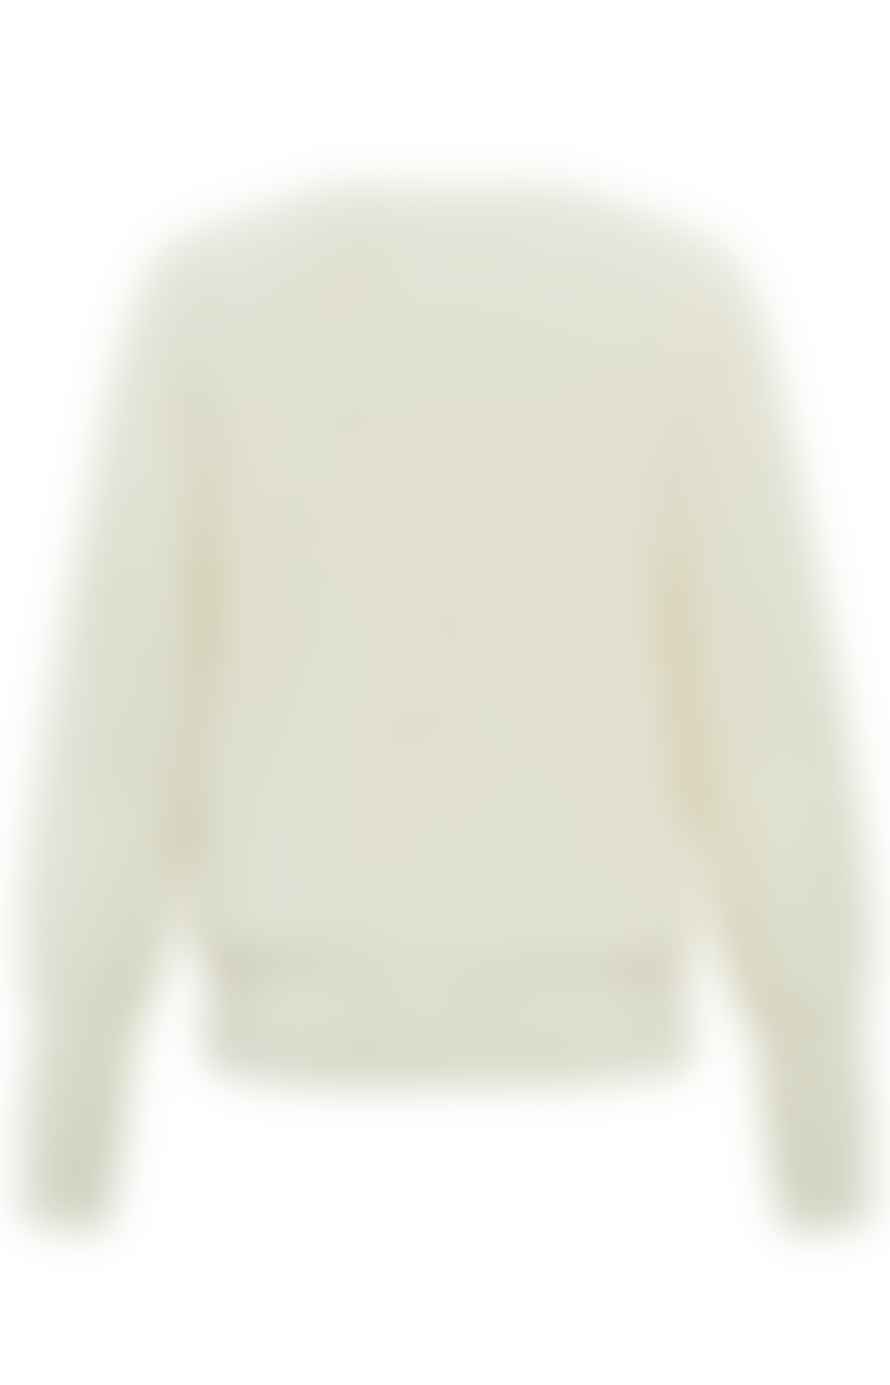 Yaya Sweater With V-neckline And Sleeve Detail | Ivory White